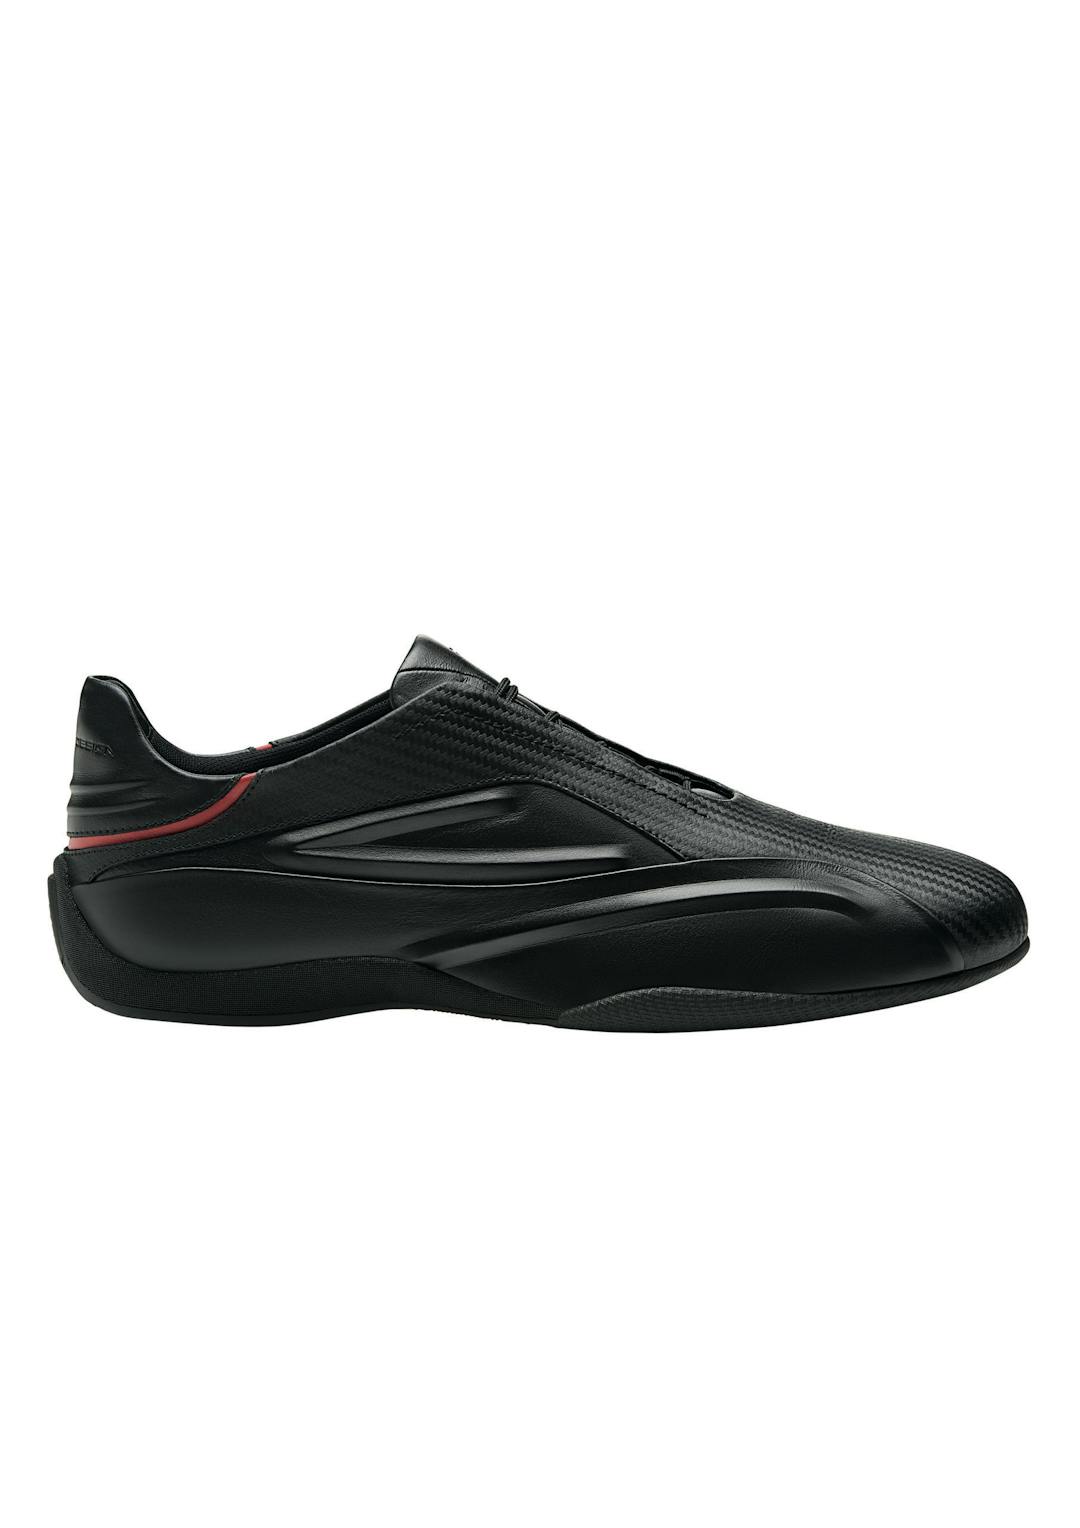 PorscheDesign_Shoes_RacerFlylineCarbonDesign_Sneaker_BlackEdition